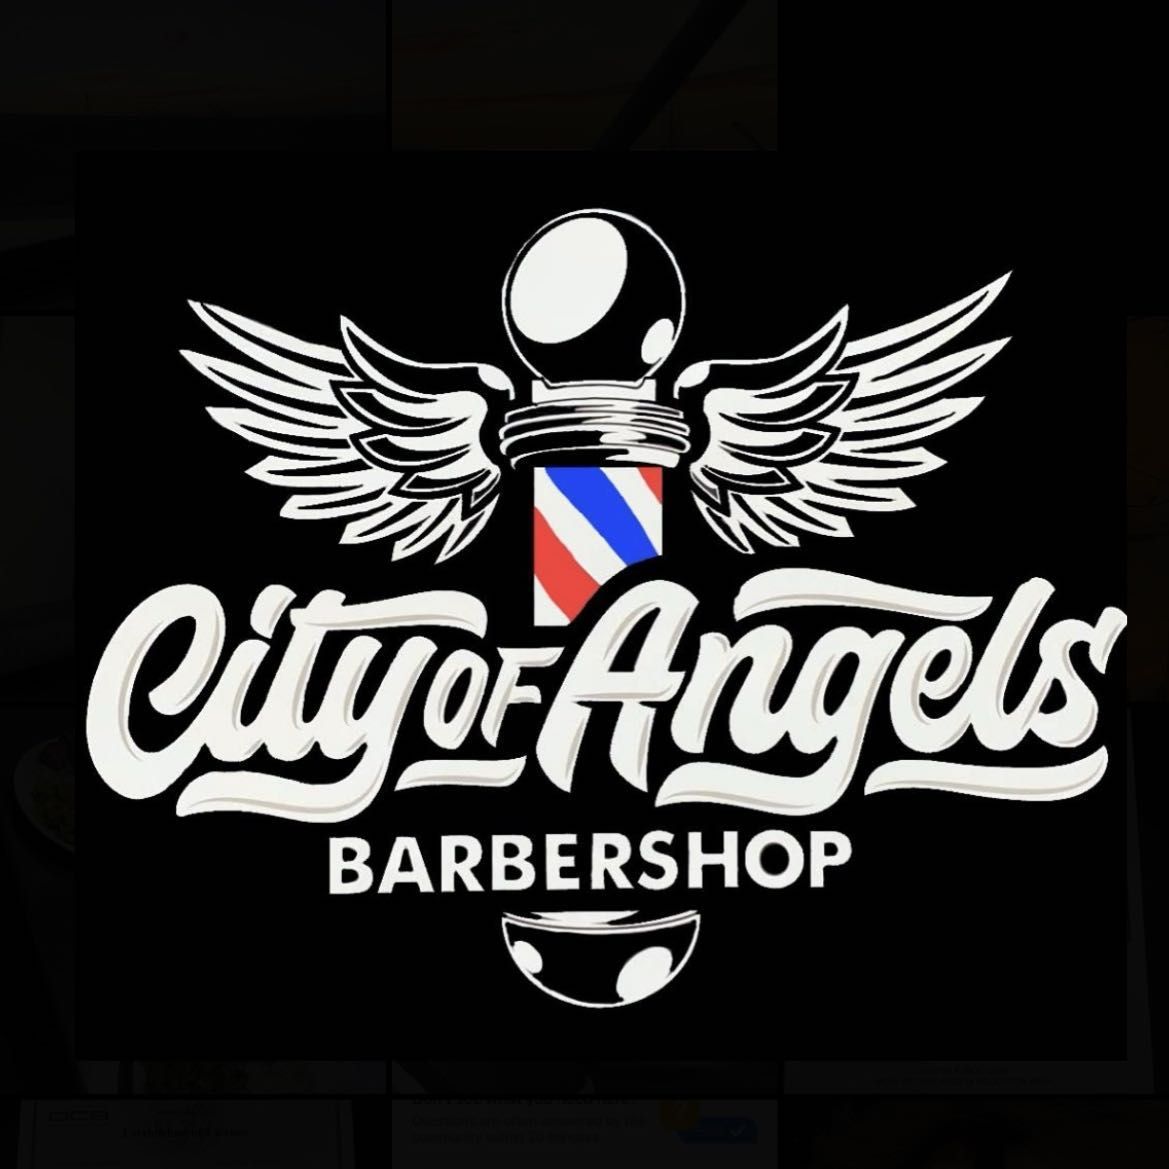 City Of Angels Barbershop, 4385 East Olympic Blvd, Los Angeles, 90023